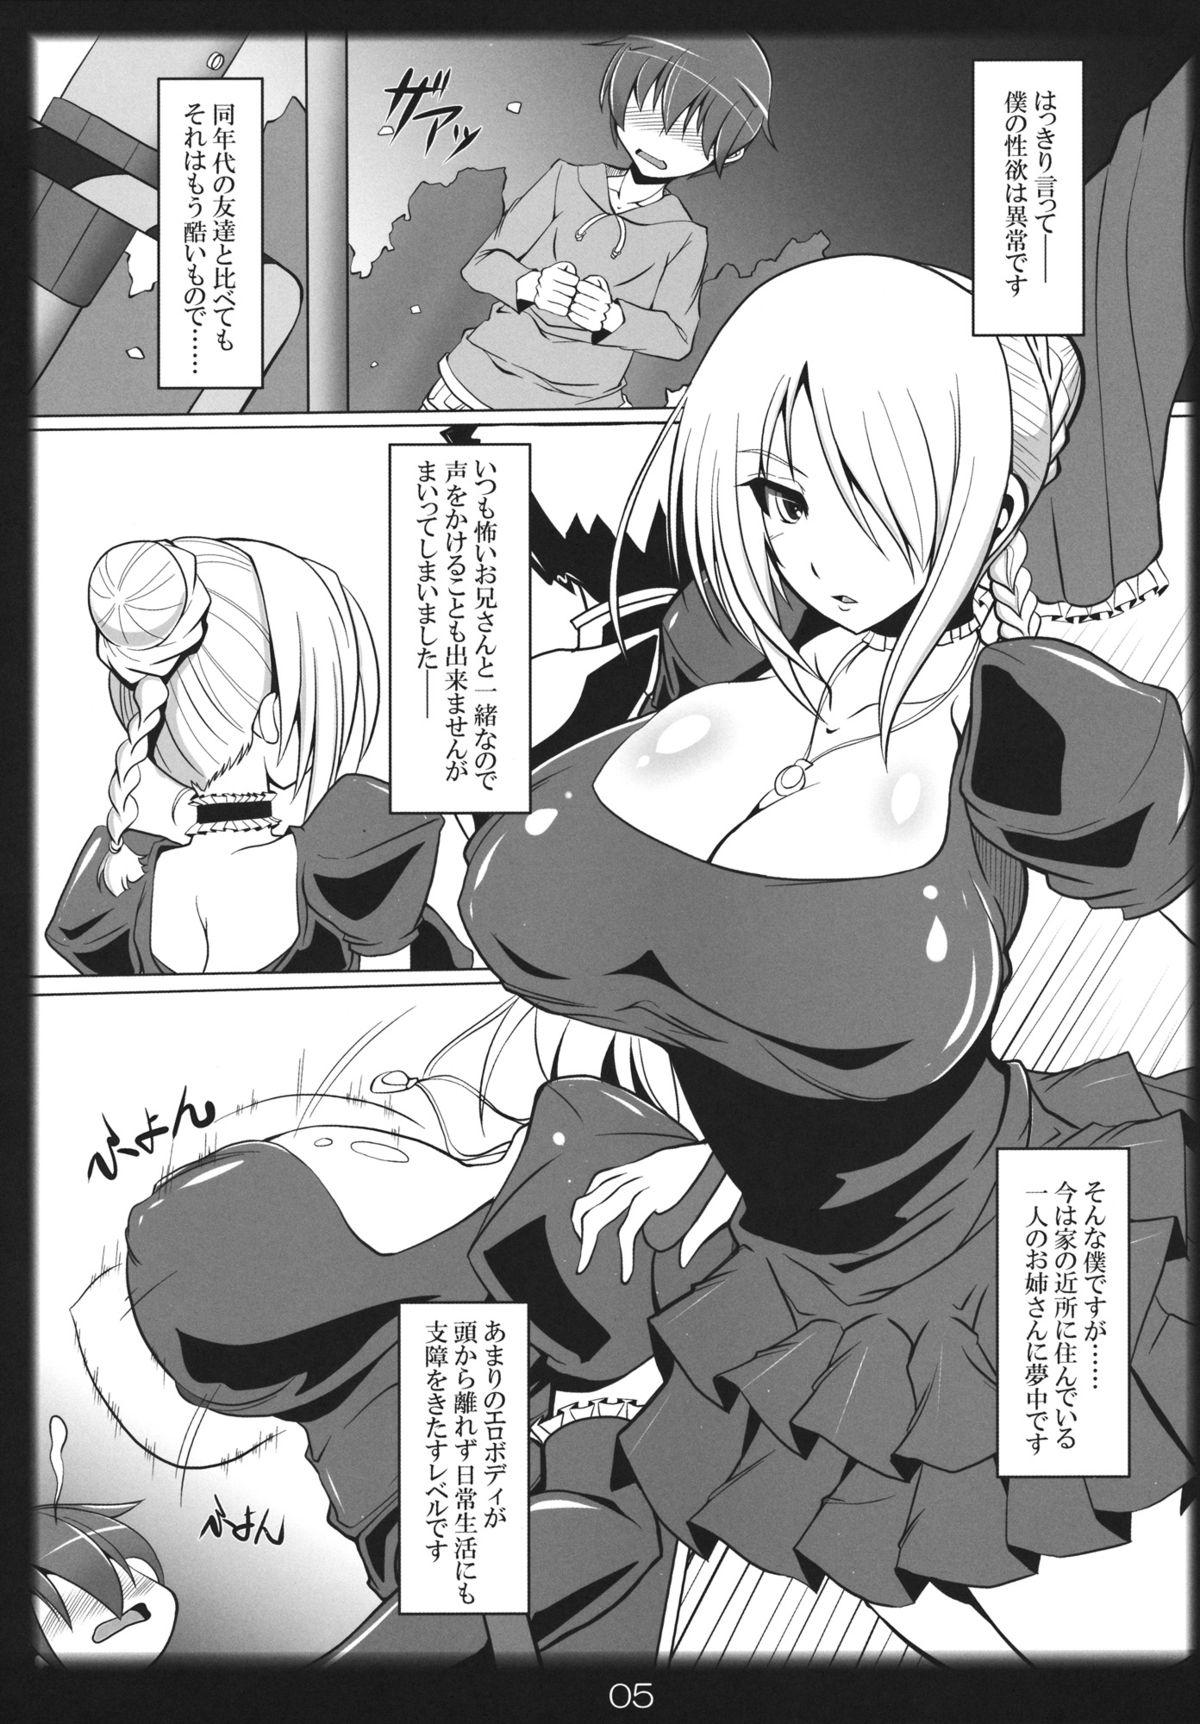 Foreplay Yobaretemasuyo, Hilda-san. - Beelzebub Hotel - Page 4